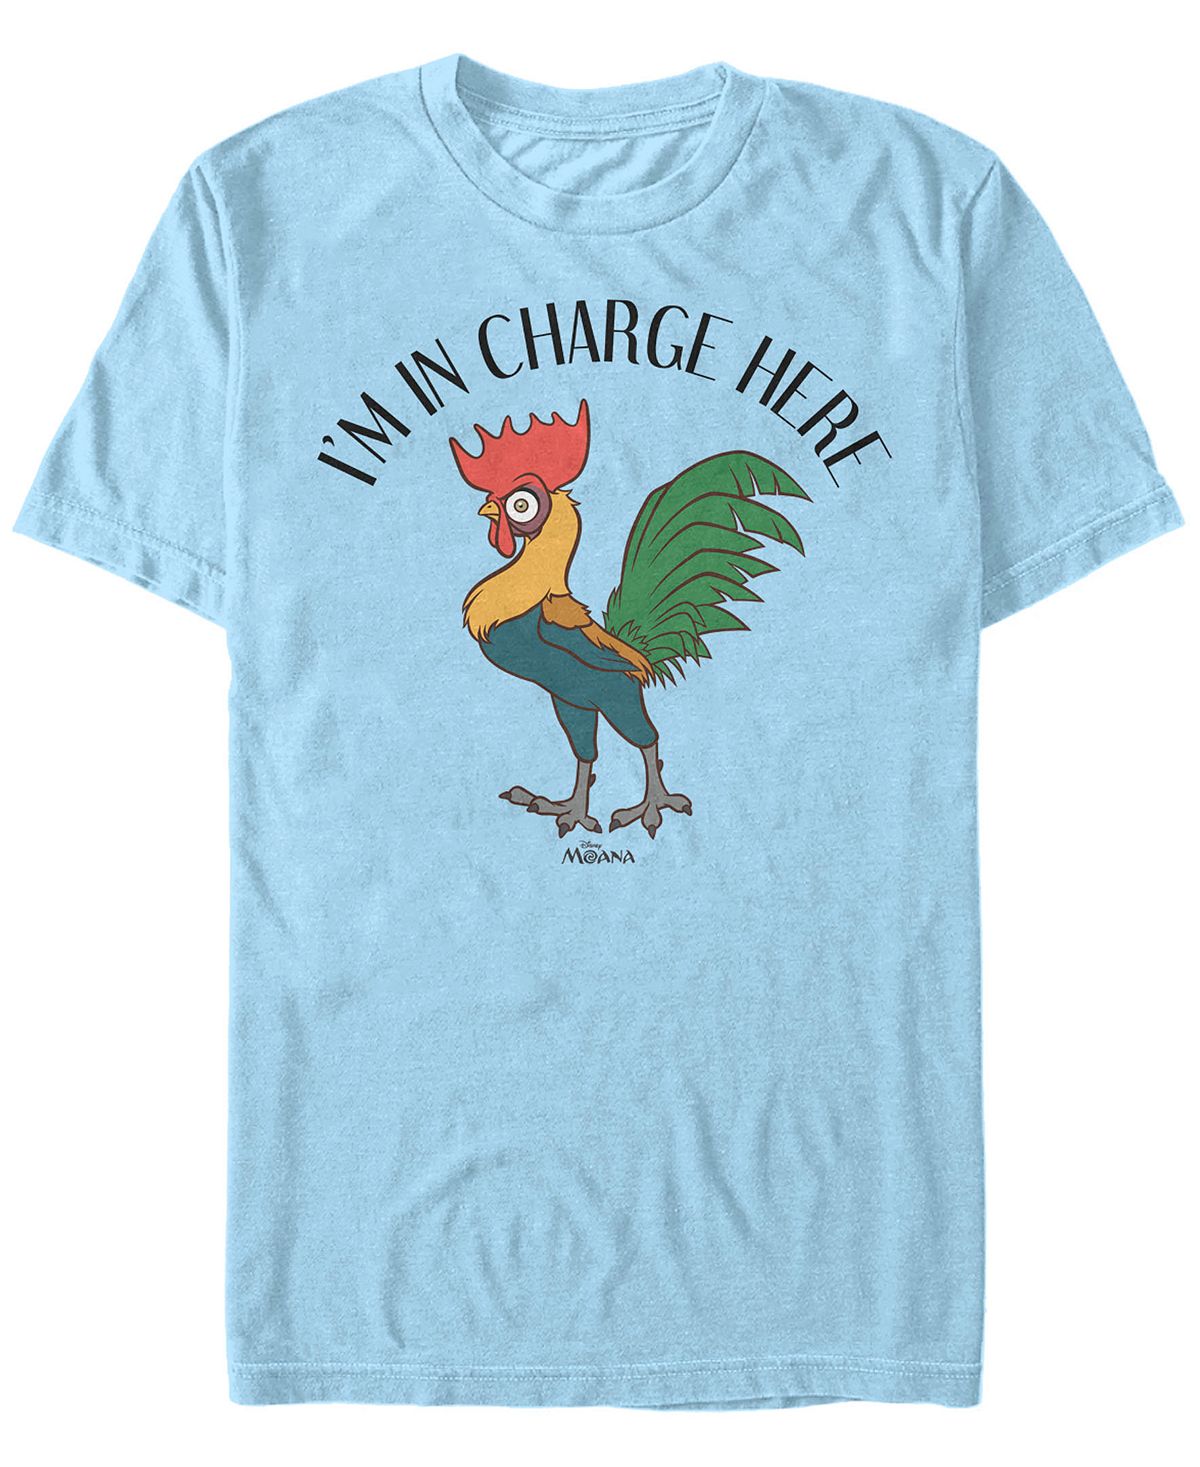 Мужская футболка с коротким рукавом moana hei hei in charge от disney Fifth Sun, голубой